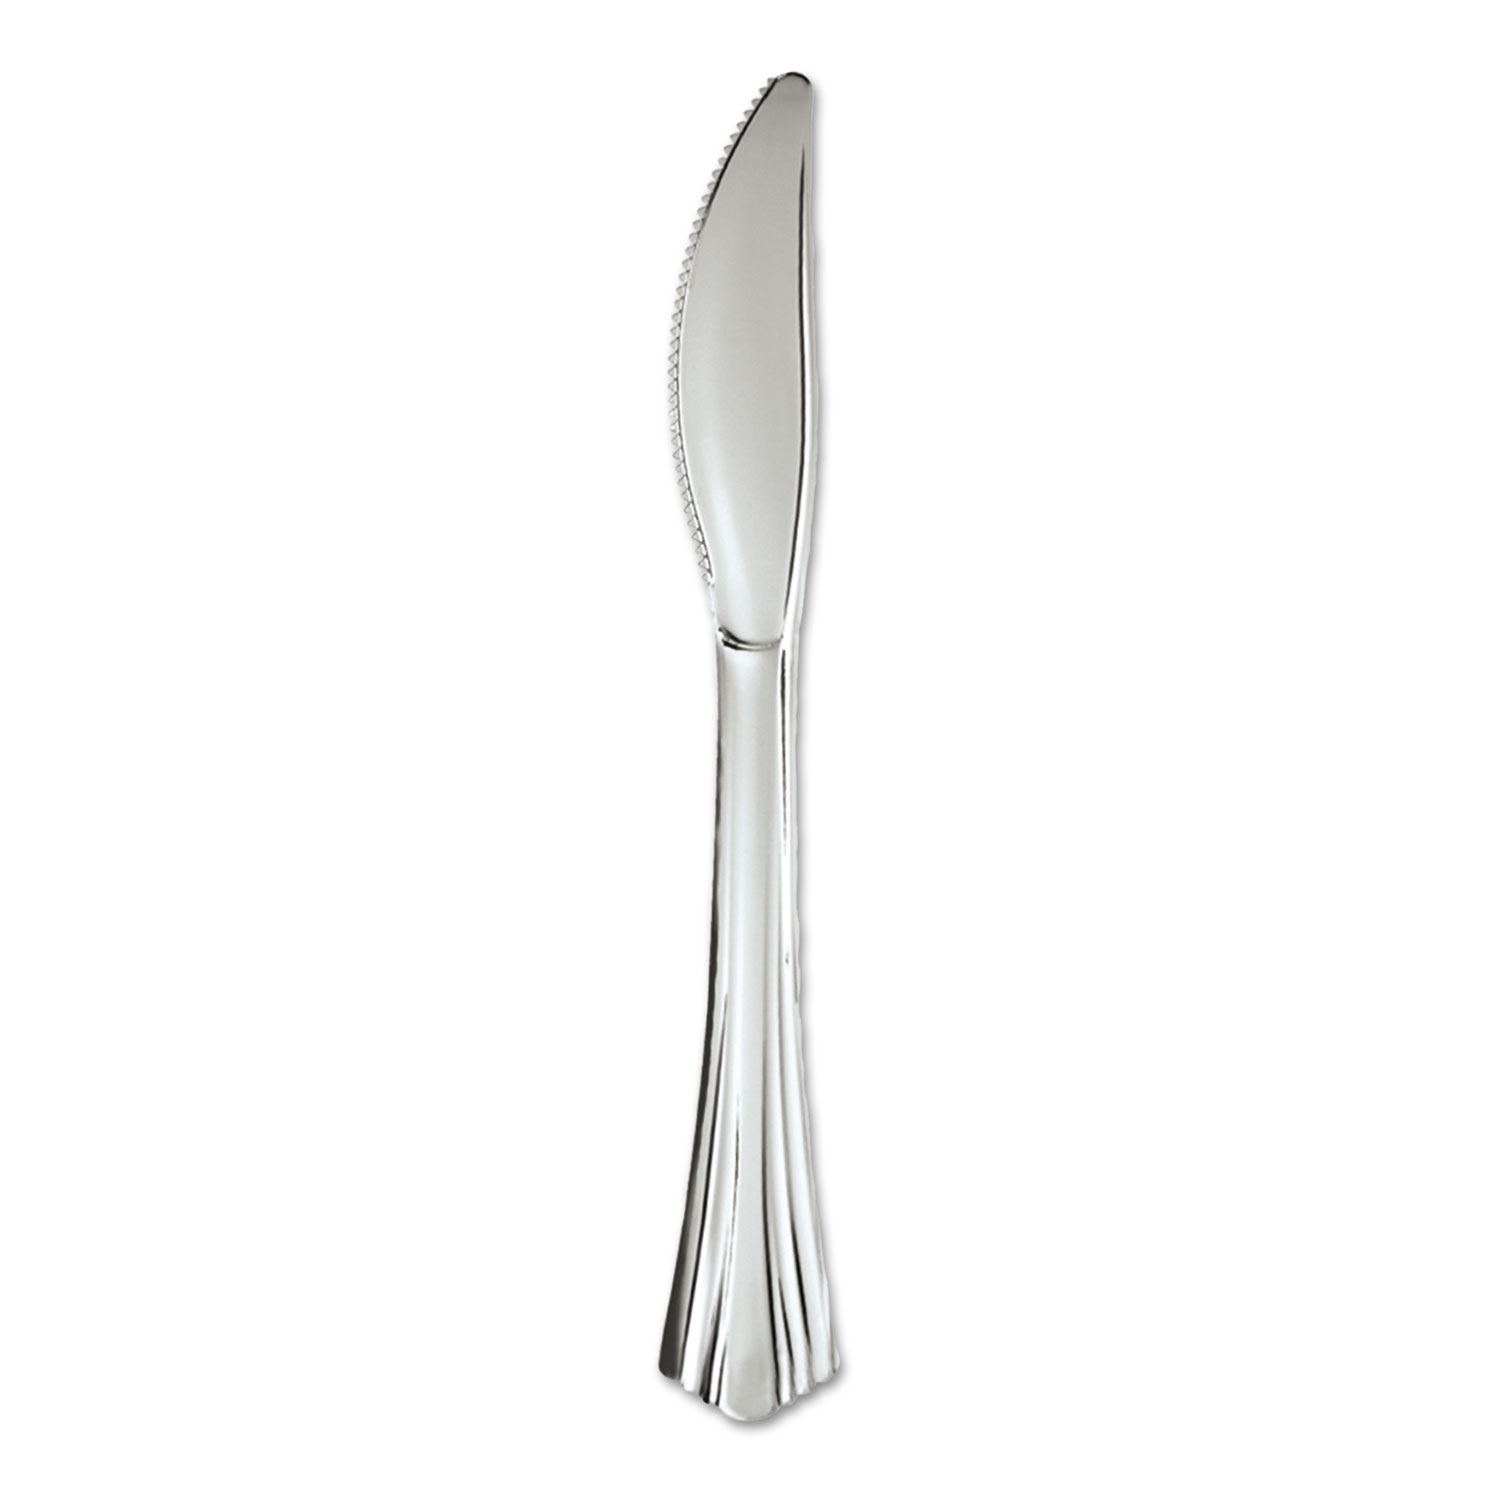  WNA WNA 630155 Heavyweight Plastic Knives, Silver, 7 1/2, Reflections Design, 600/Carton (WNA630155) 